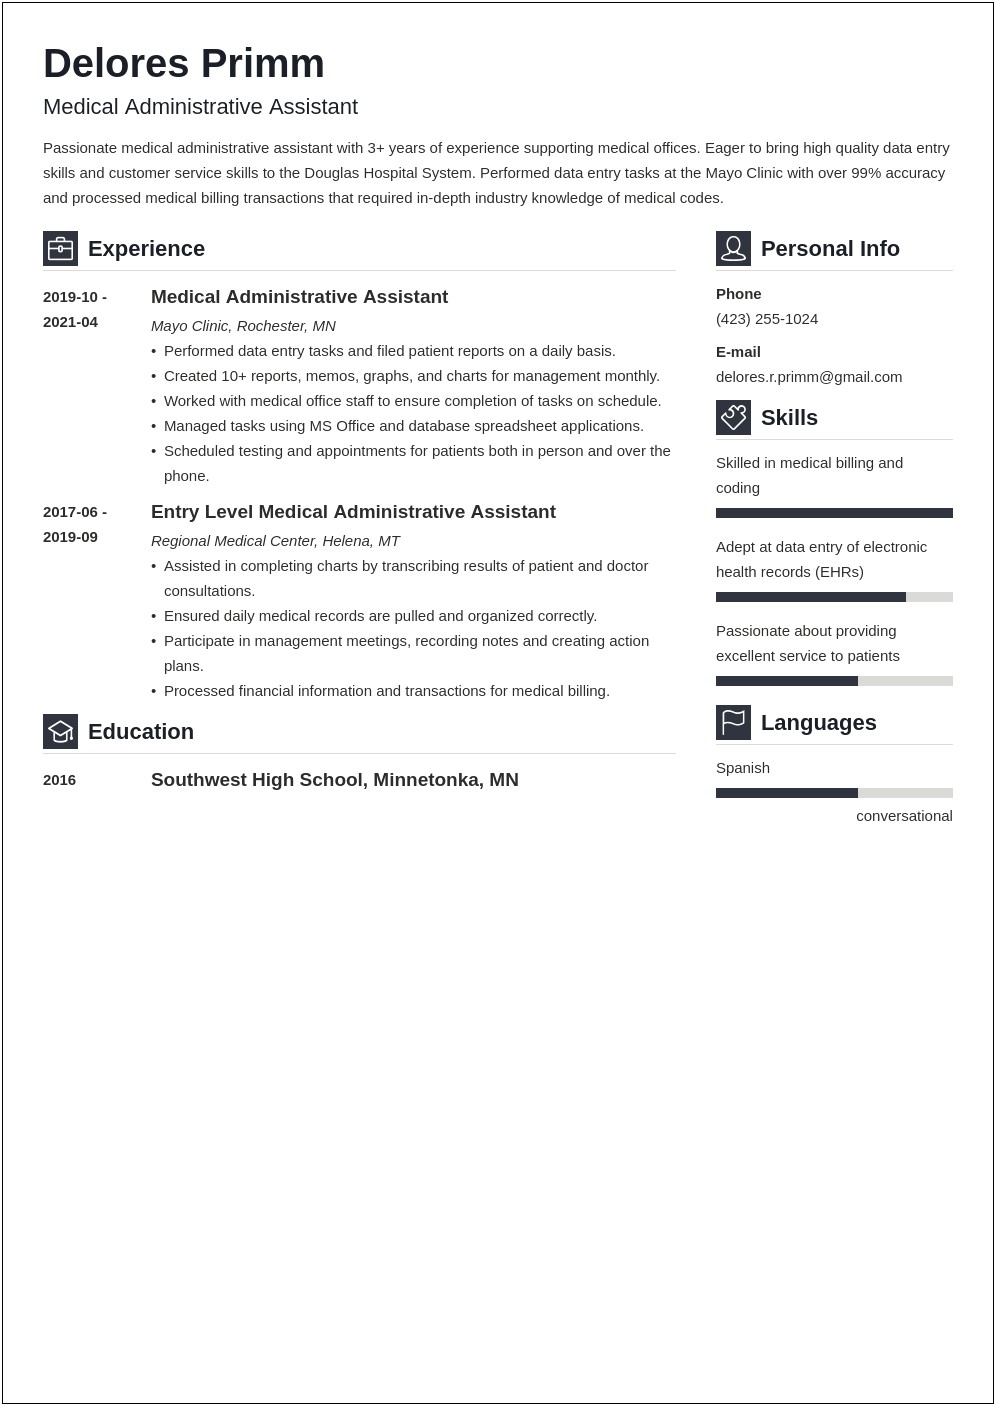 Resume Objective Samples For Medical Office Coordinator